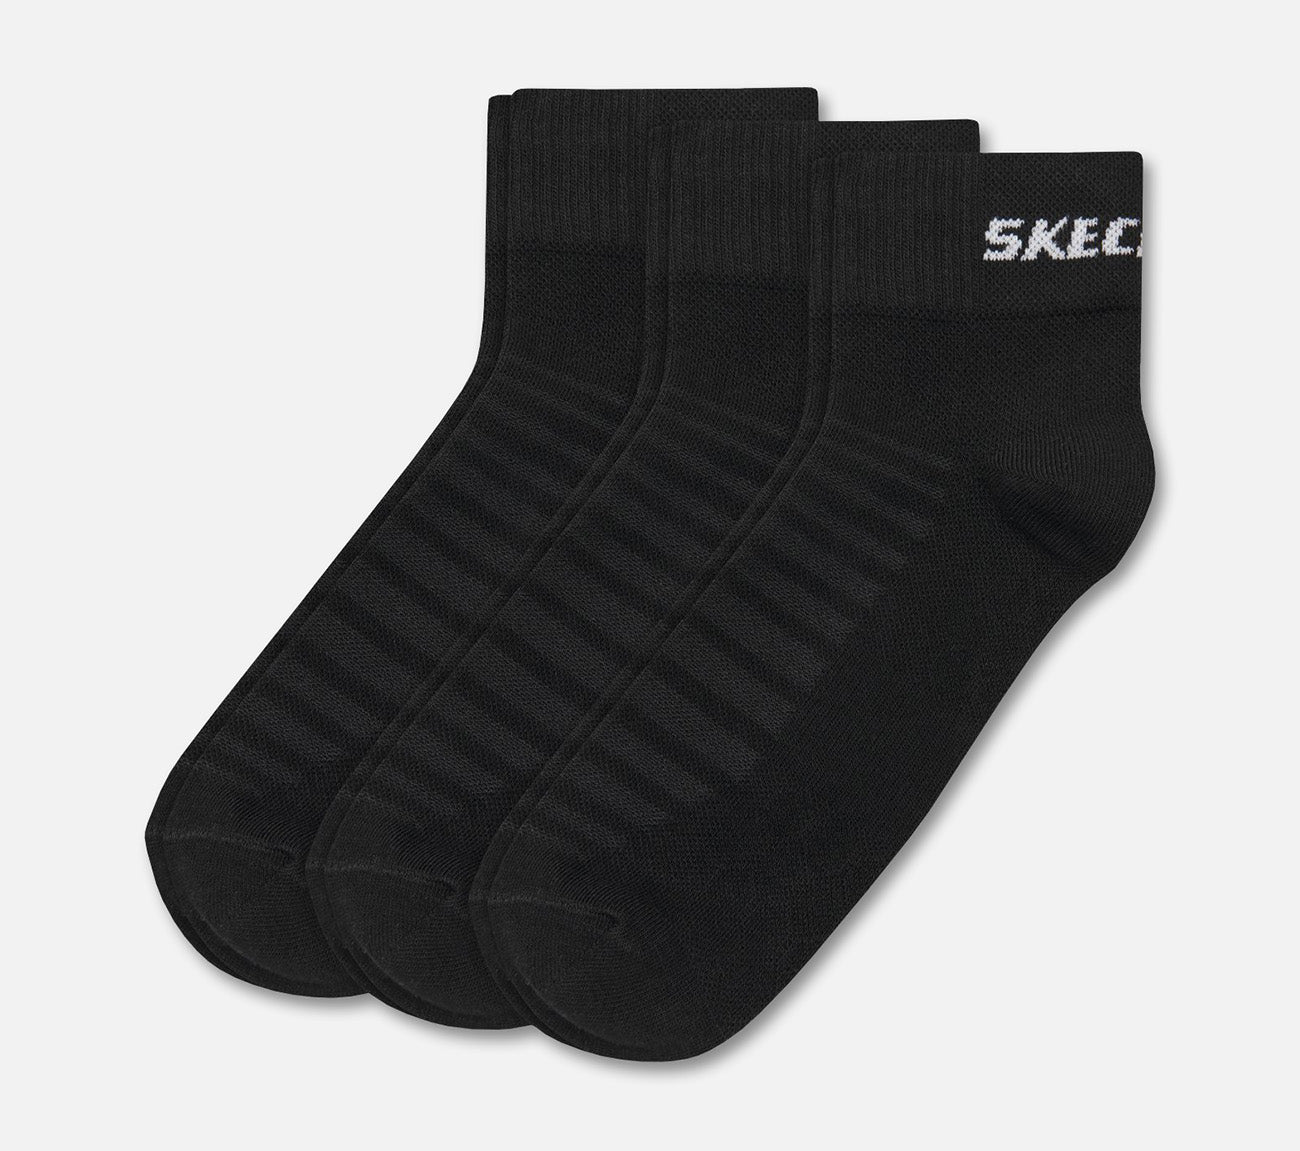 Basic - 3 pack strumpor Sock Skechers